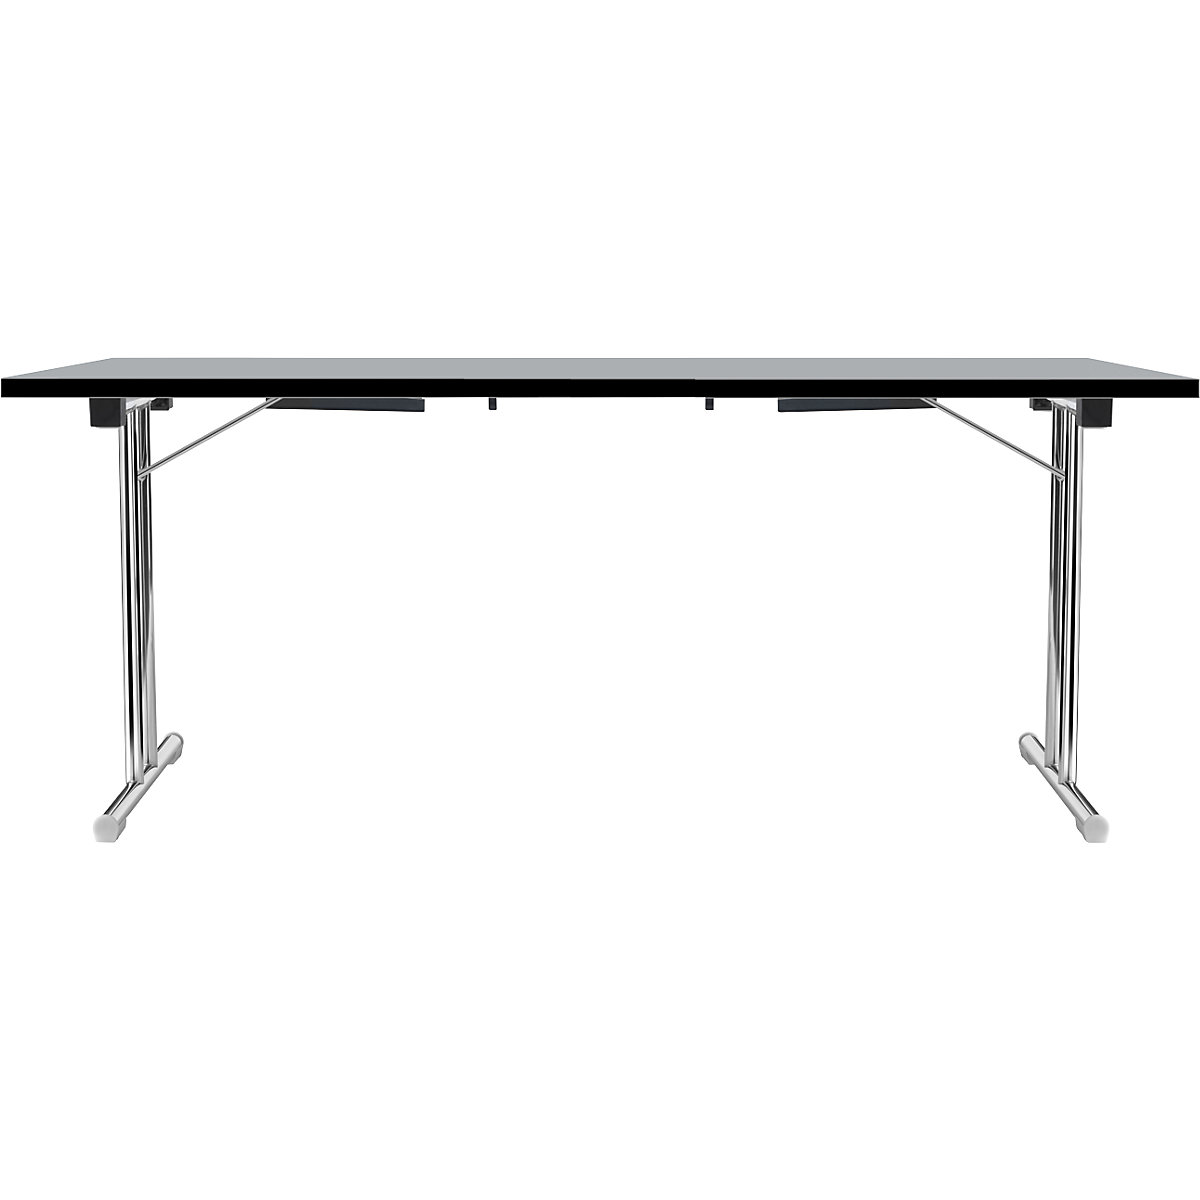 Folding table with double T base, tubular steel frame, chrome plated, light grey/black, WxD 1800 x 800 mm-9